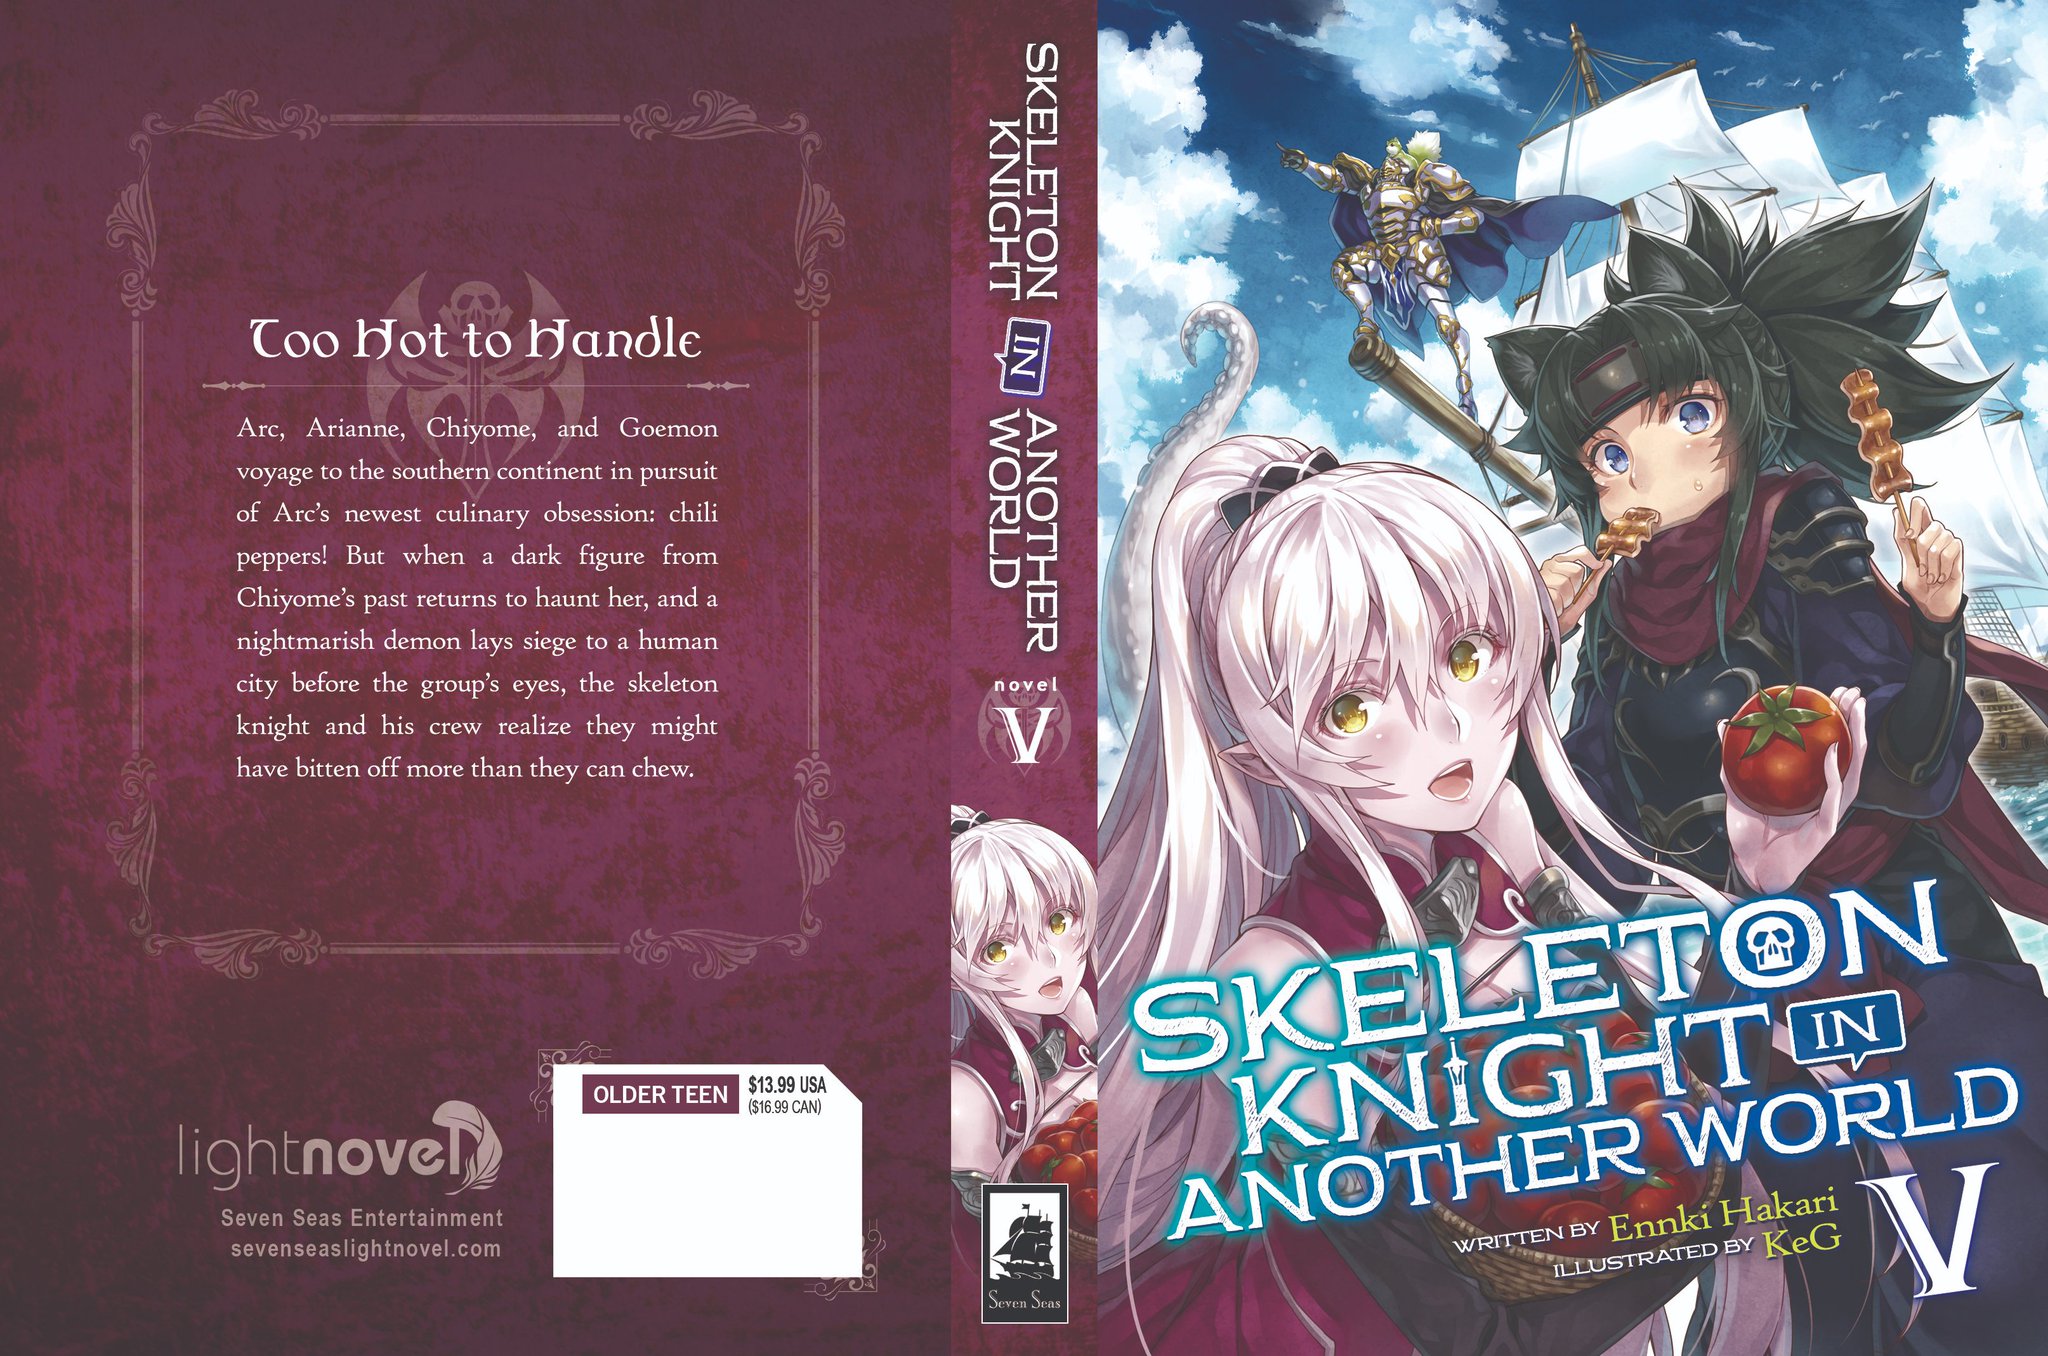 Skeleton Knight in Another World (light Novel) Vol. 5 